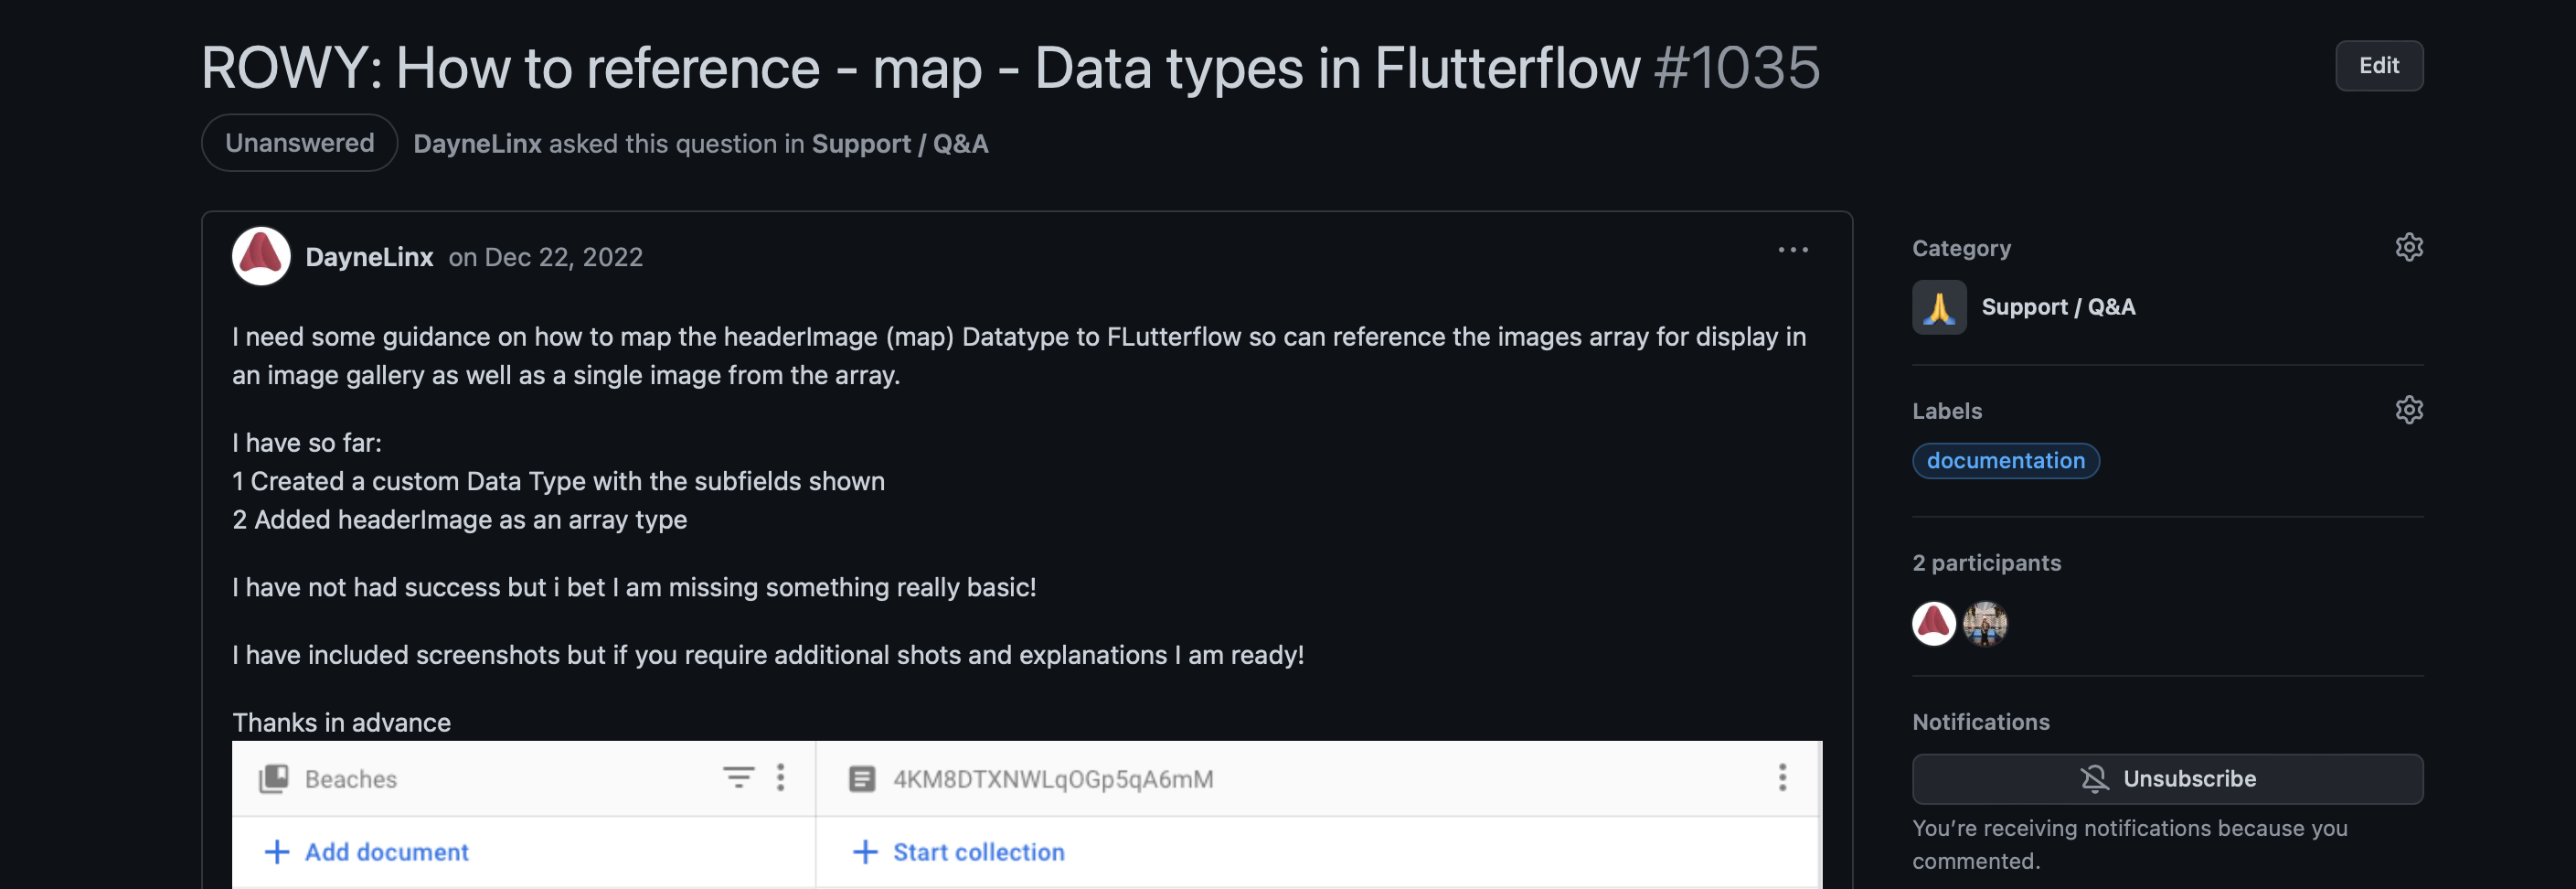 FAQ - Mapping of datatypes